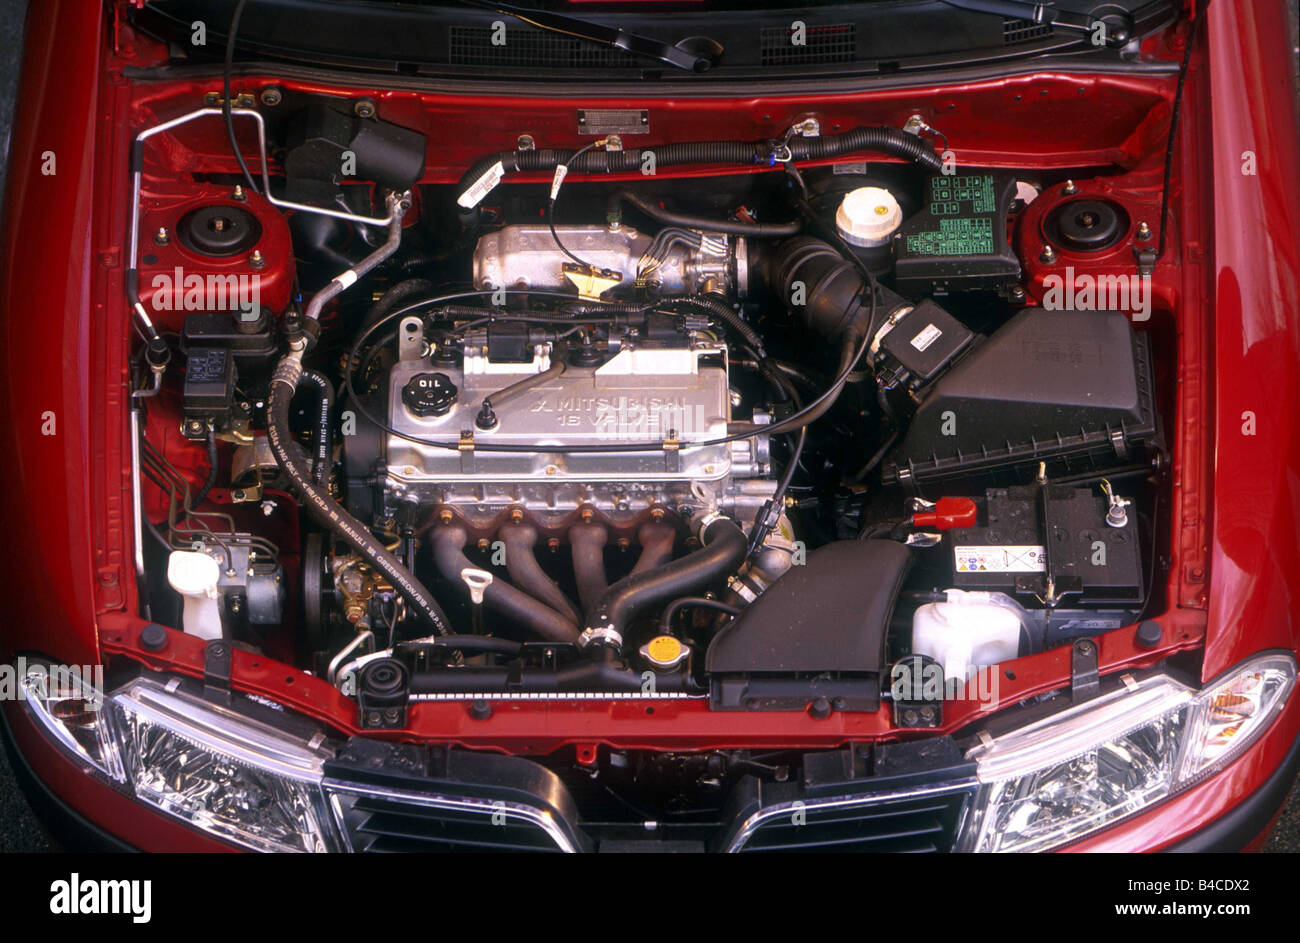 Car, Mitsubishi Carisma 1.6, Limousine, medium class, model year 2000-,  ruby colored, view in engine compartment, engine, techni Stock Photo - Alamy